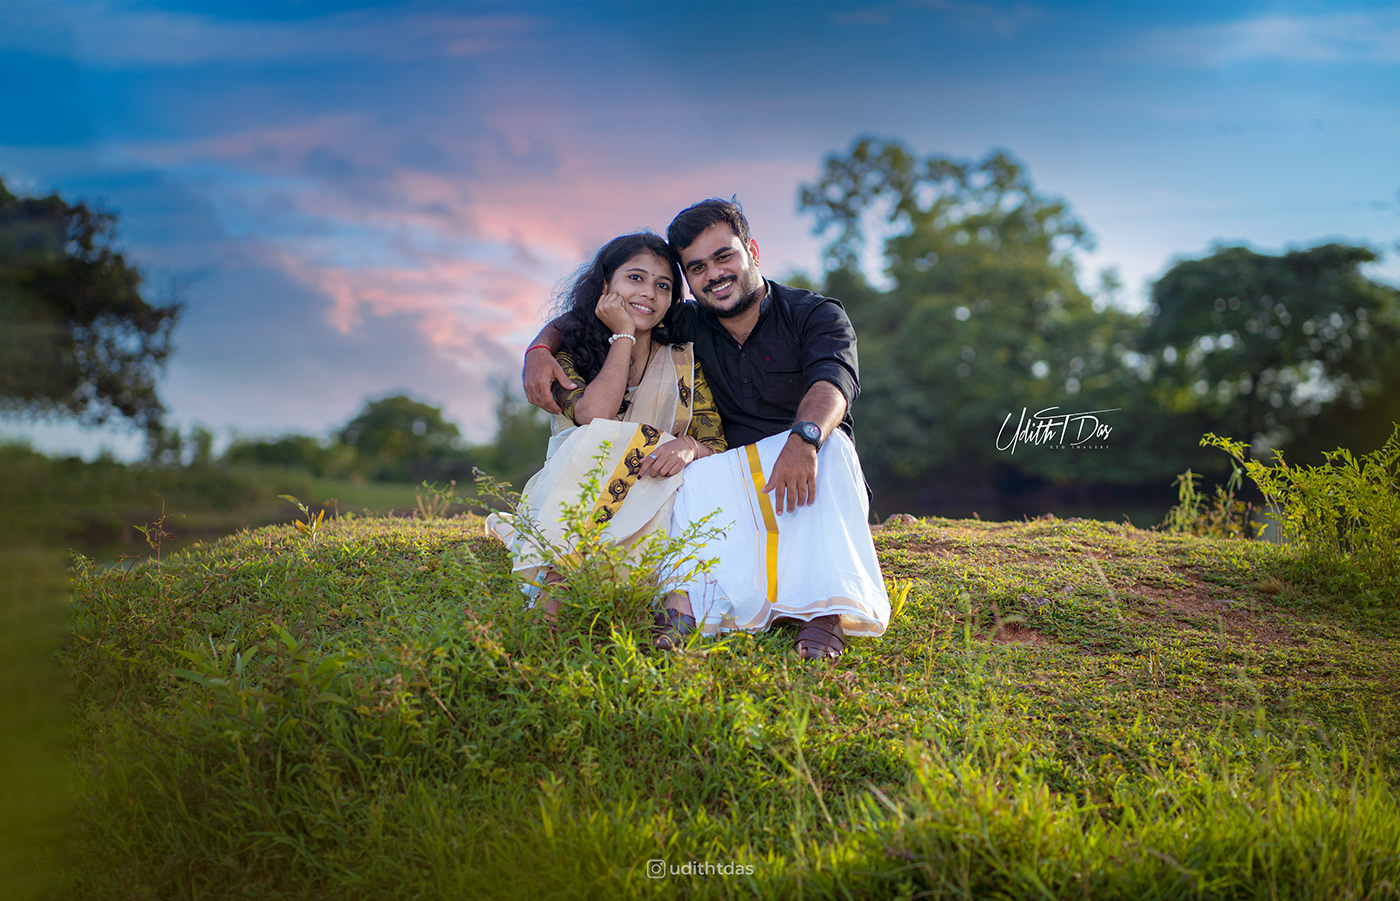 Save The Date | Kerala Wedding On Behance